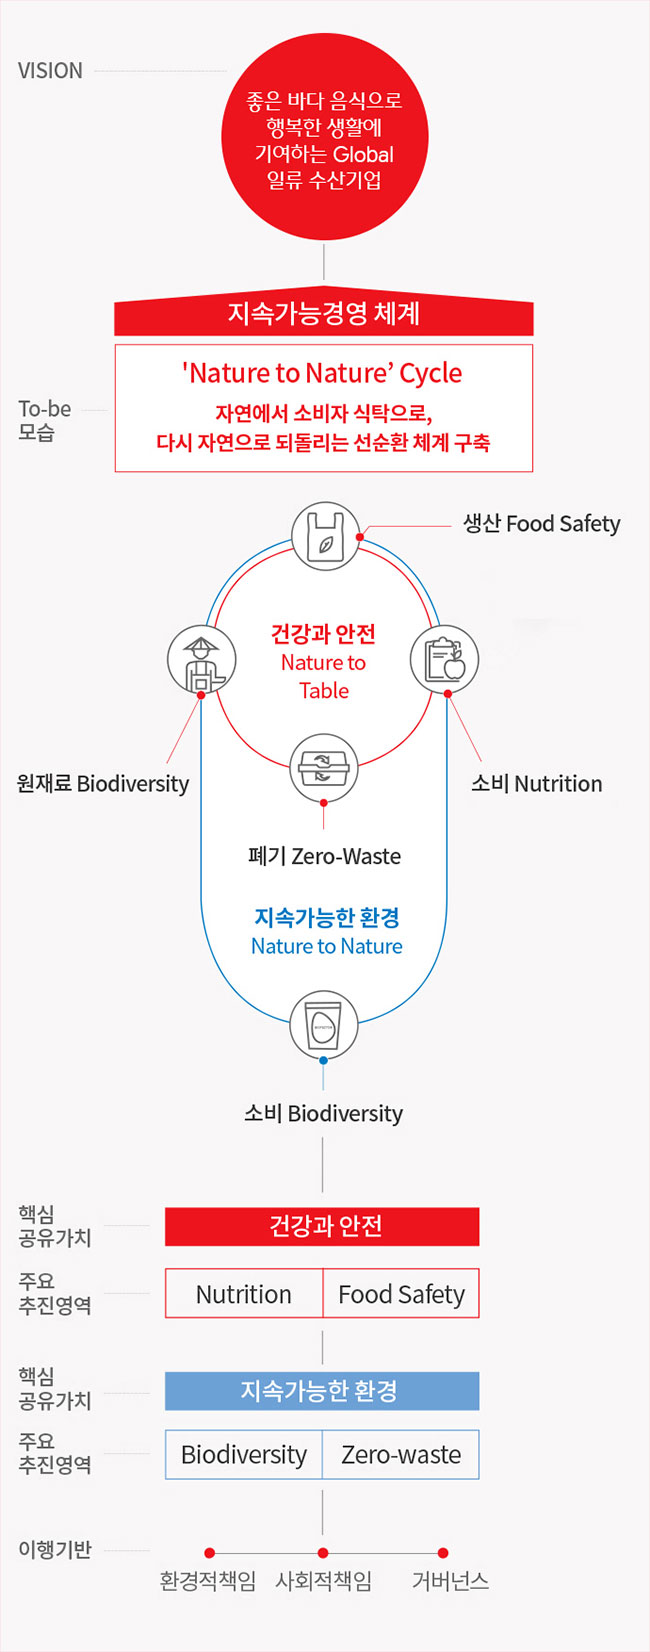 VISION : Global No.1 Food & BIO Company > To-be 모습 : 지속가능경영 체계 - 'Nature to Nature'Cycle 자연에서 소비자 식탁으로, 다시 자연으로 되돌리는 선순환 체계 구축 > 건강과 안전 (Nature to Table) : 생산 Food Safety ( 즐거운동행, 미세먼지, 미세플라스틱, Zero化 ) , 원재료 Biodiversity ( 베트남 농촌개발 사업, Renewable 자원대체사업 ), 소비 Nutrition ( 개인맞춤형 영양증진 사업 ,항생제 대체 소재 ), 폐기 Zero-Waste ( 식품폐기 저감/ Recycling 체계 구축) - 지속 가능한 환경 Nature to Nature > 소비 Biodiversity (화학소재 대체 친환경 바이오 소재, 친환경 사료첨가제 사업, 친환경 바이오 농업 소재 ) > 핵심 공유가치 : 건강과 안전 > 주요 추진영역 : Nutrition & Food Safety > 핵심 공유가치 : 지속가능한 환경 > 주요 추진영역 : Biodiversity & Zero-waste > 이행 기반 : 환경적책임, 사회적책임, 거버넌스